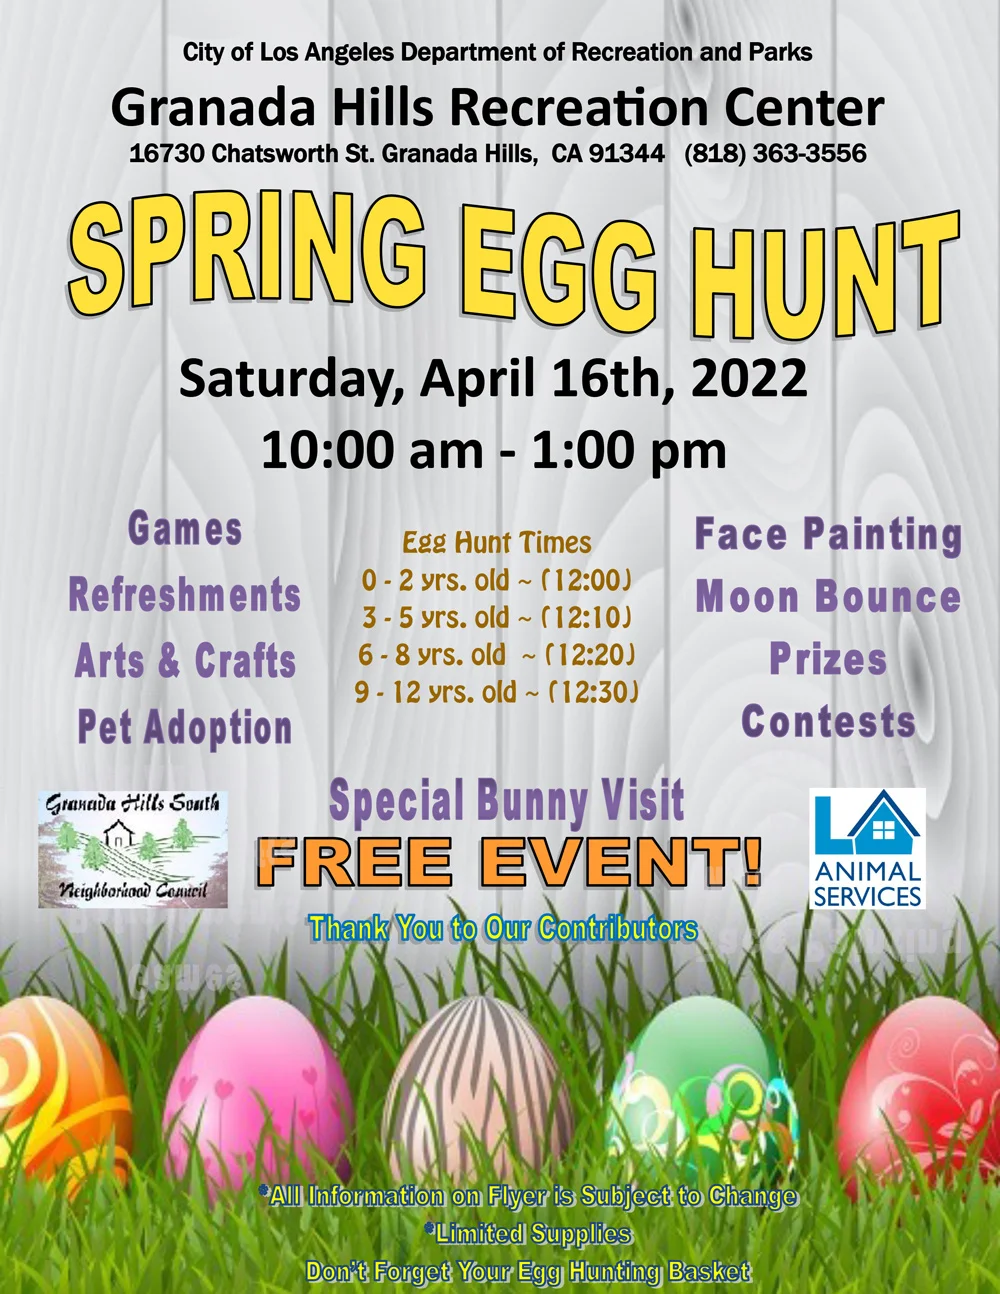 Spring Egg Hunt – Saturday, April 16 at Granada Hills Recreation Center